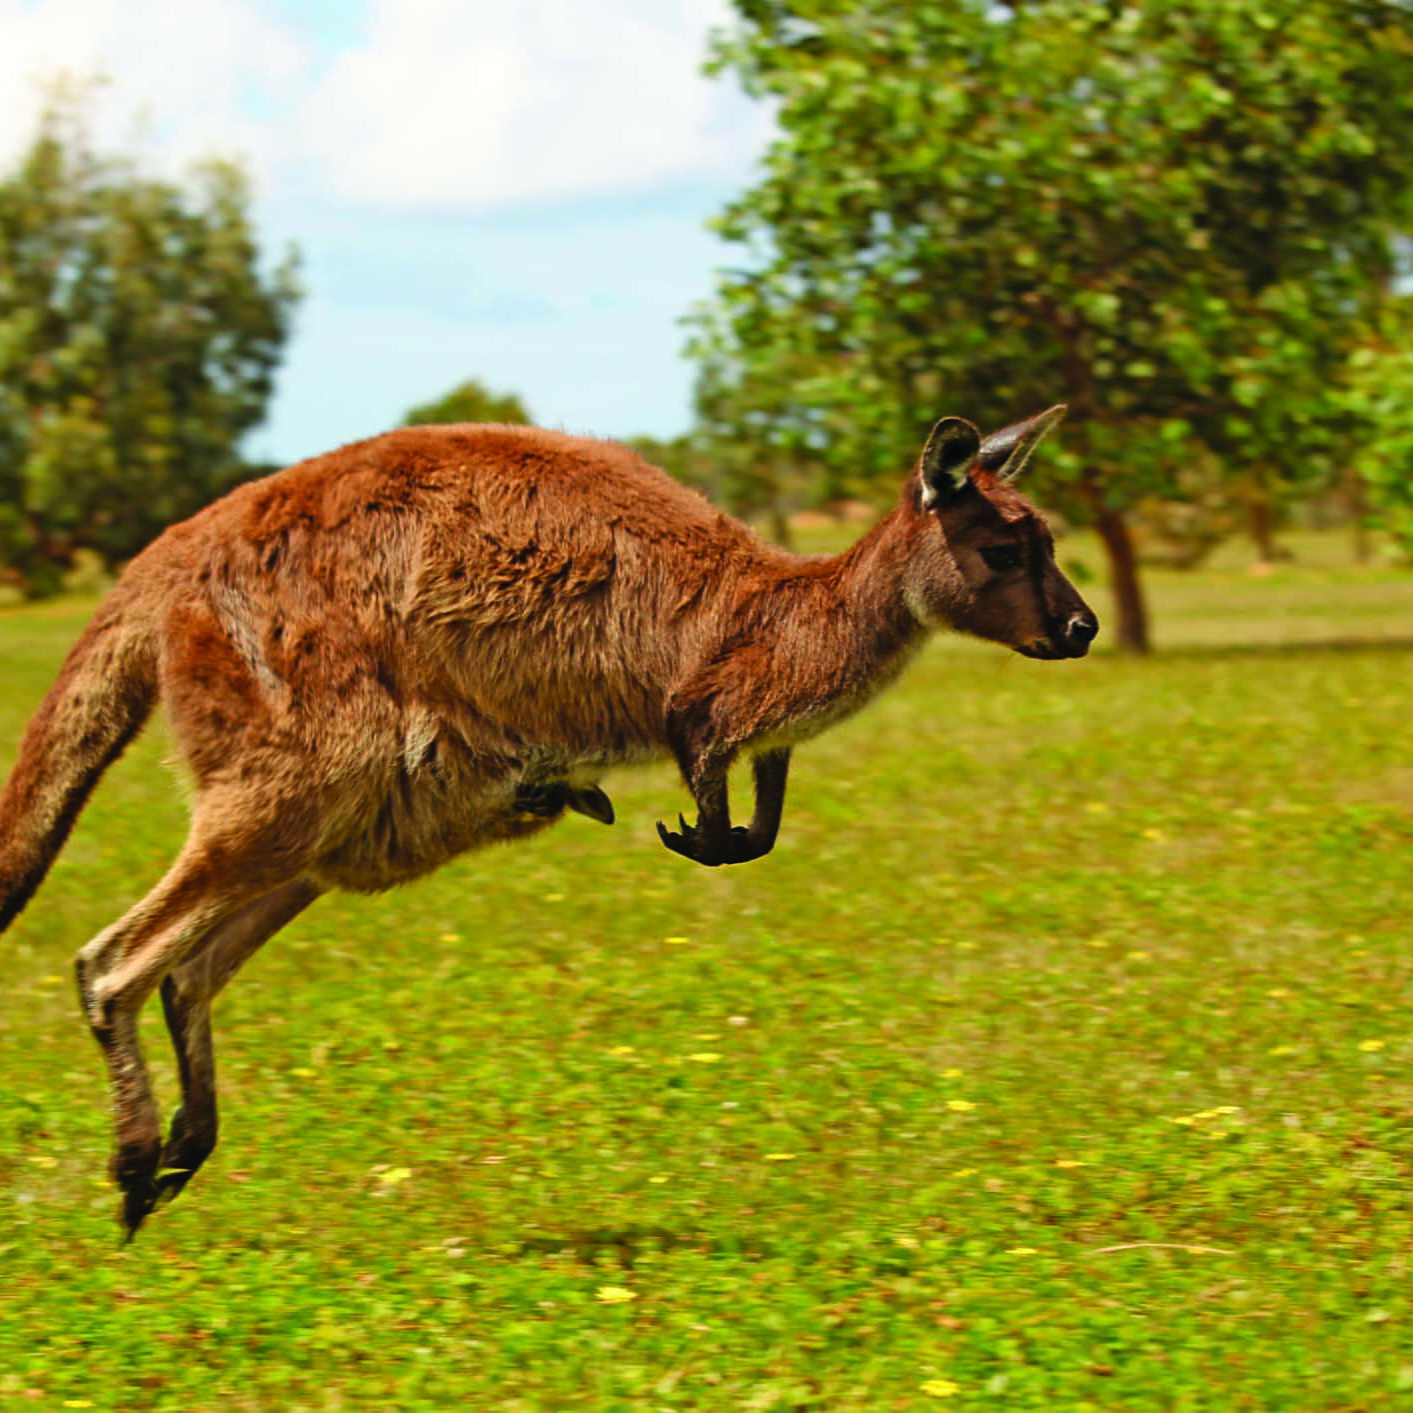 Jumping kangaroo with a joey. Kangaroo Island, Australia